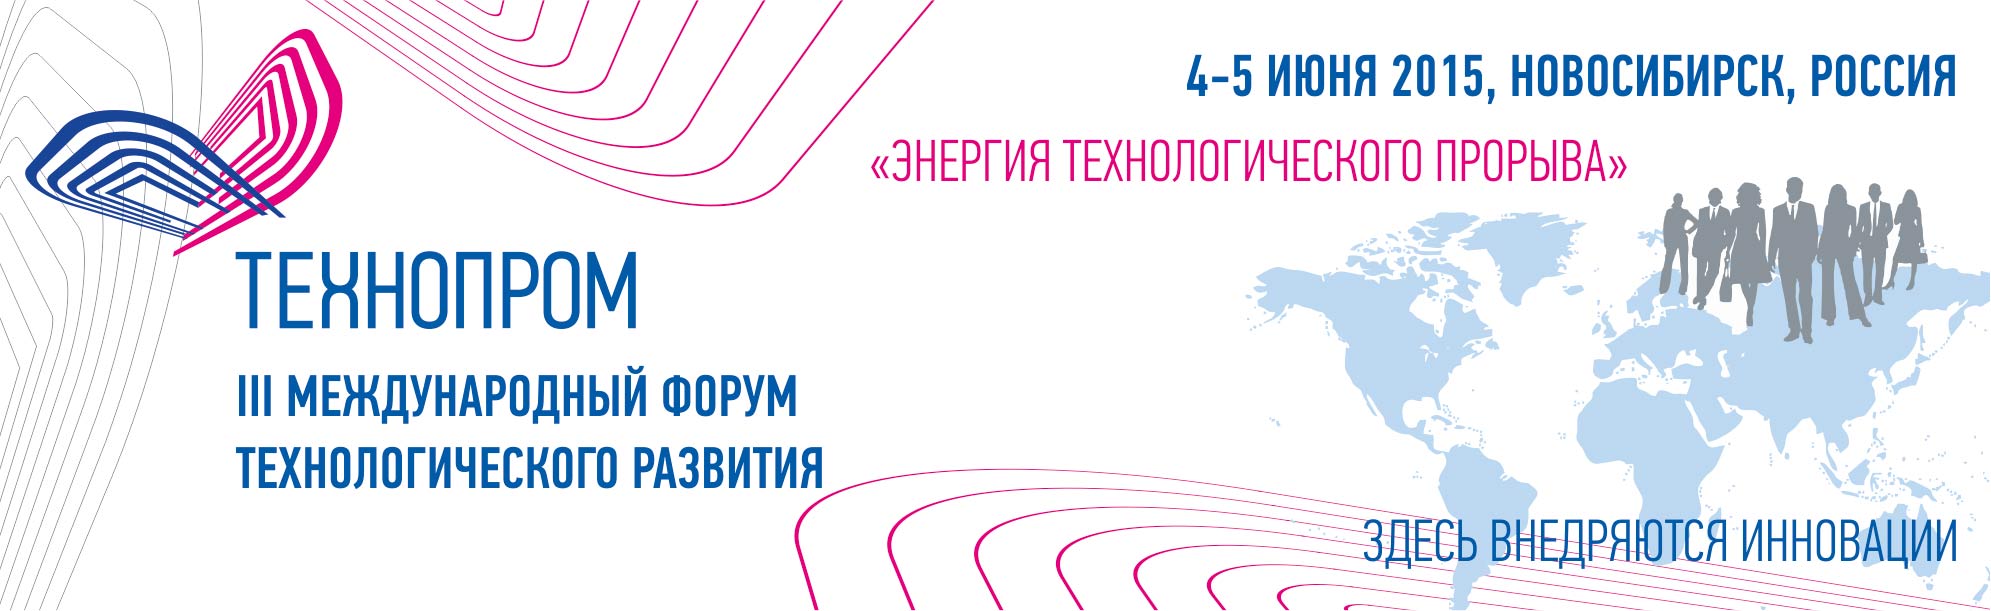 НГУЭУ - участник «Технопрома-2015»